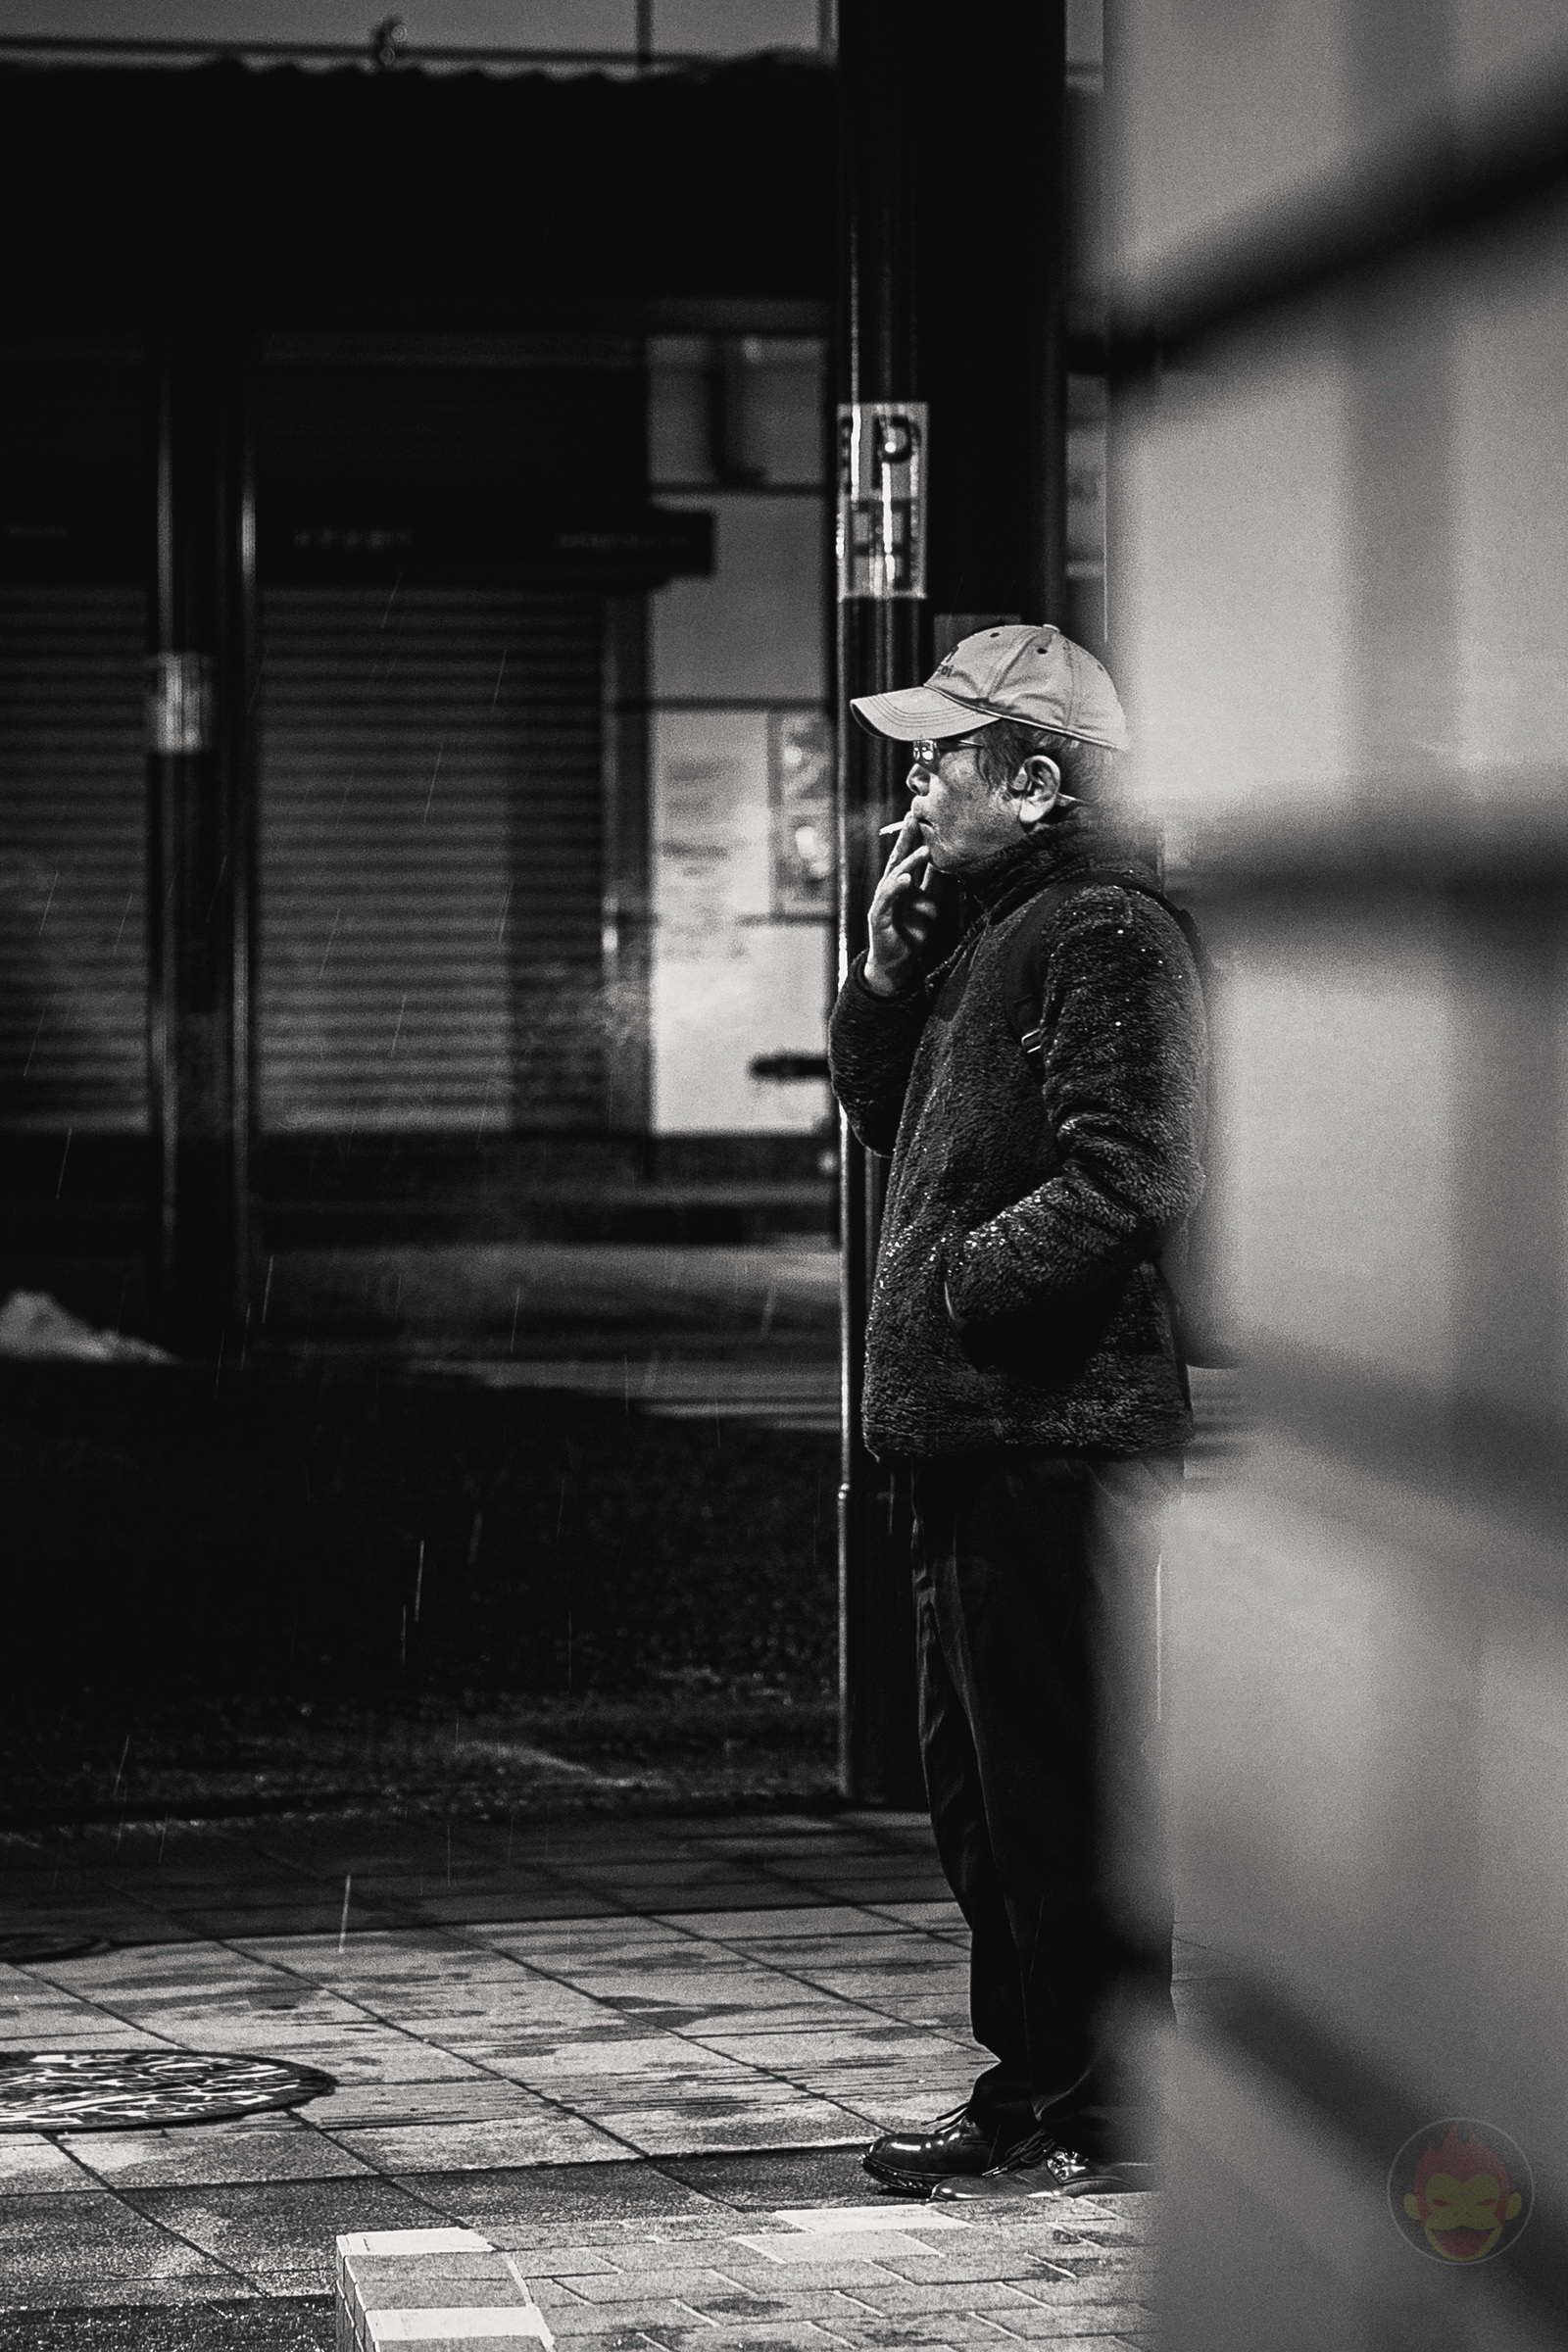 Aizu Wakamatsu night in the rain street photography 09